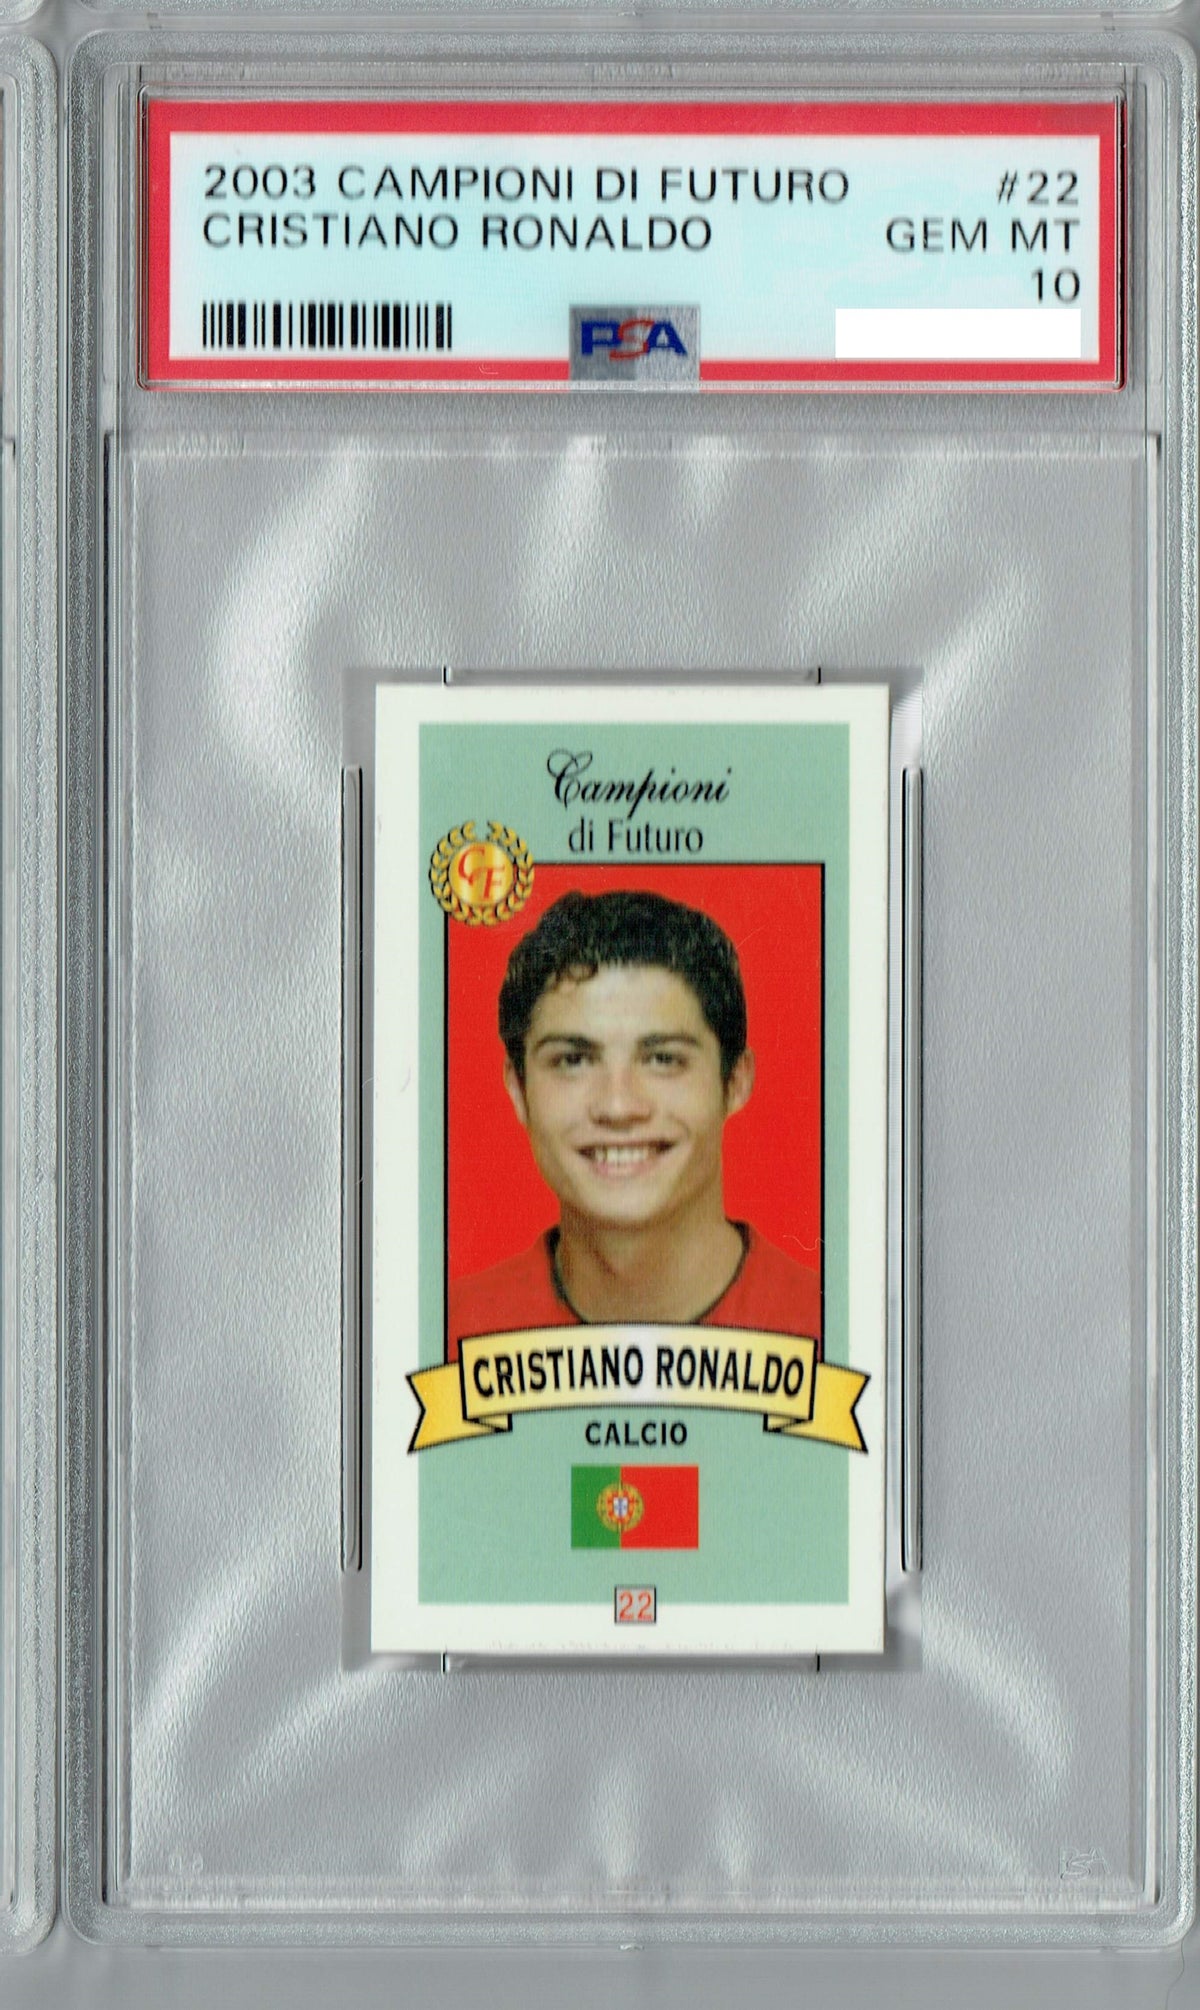 PSA 10 Cristiano Ronaldo 2003 Campioni Di Futuro #22 Rookie Card 